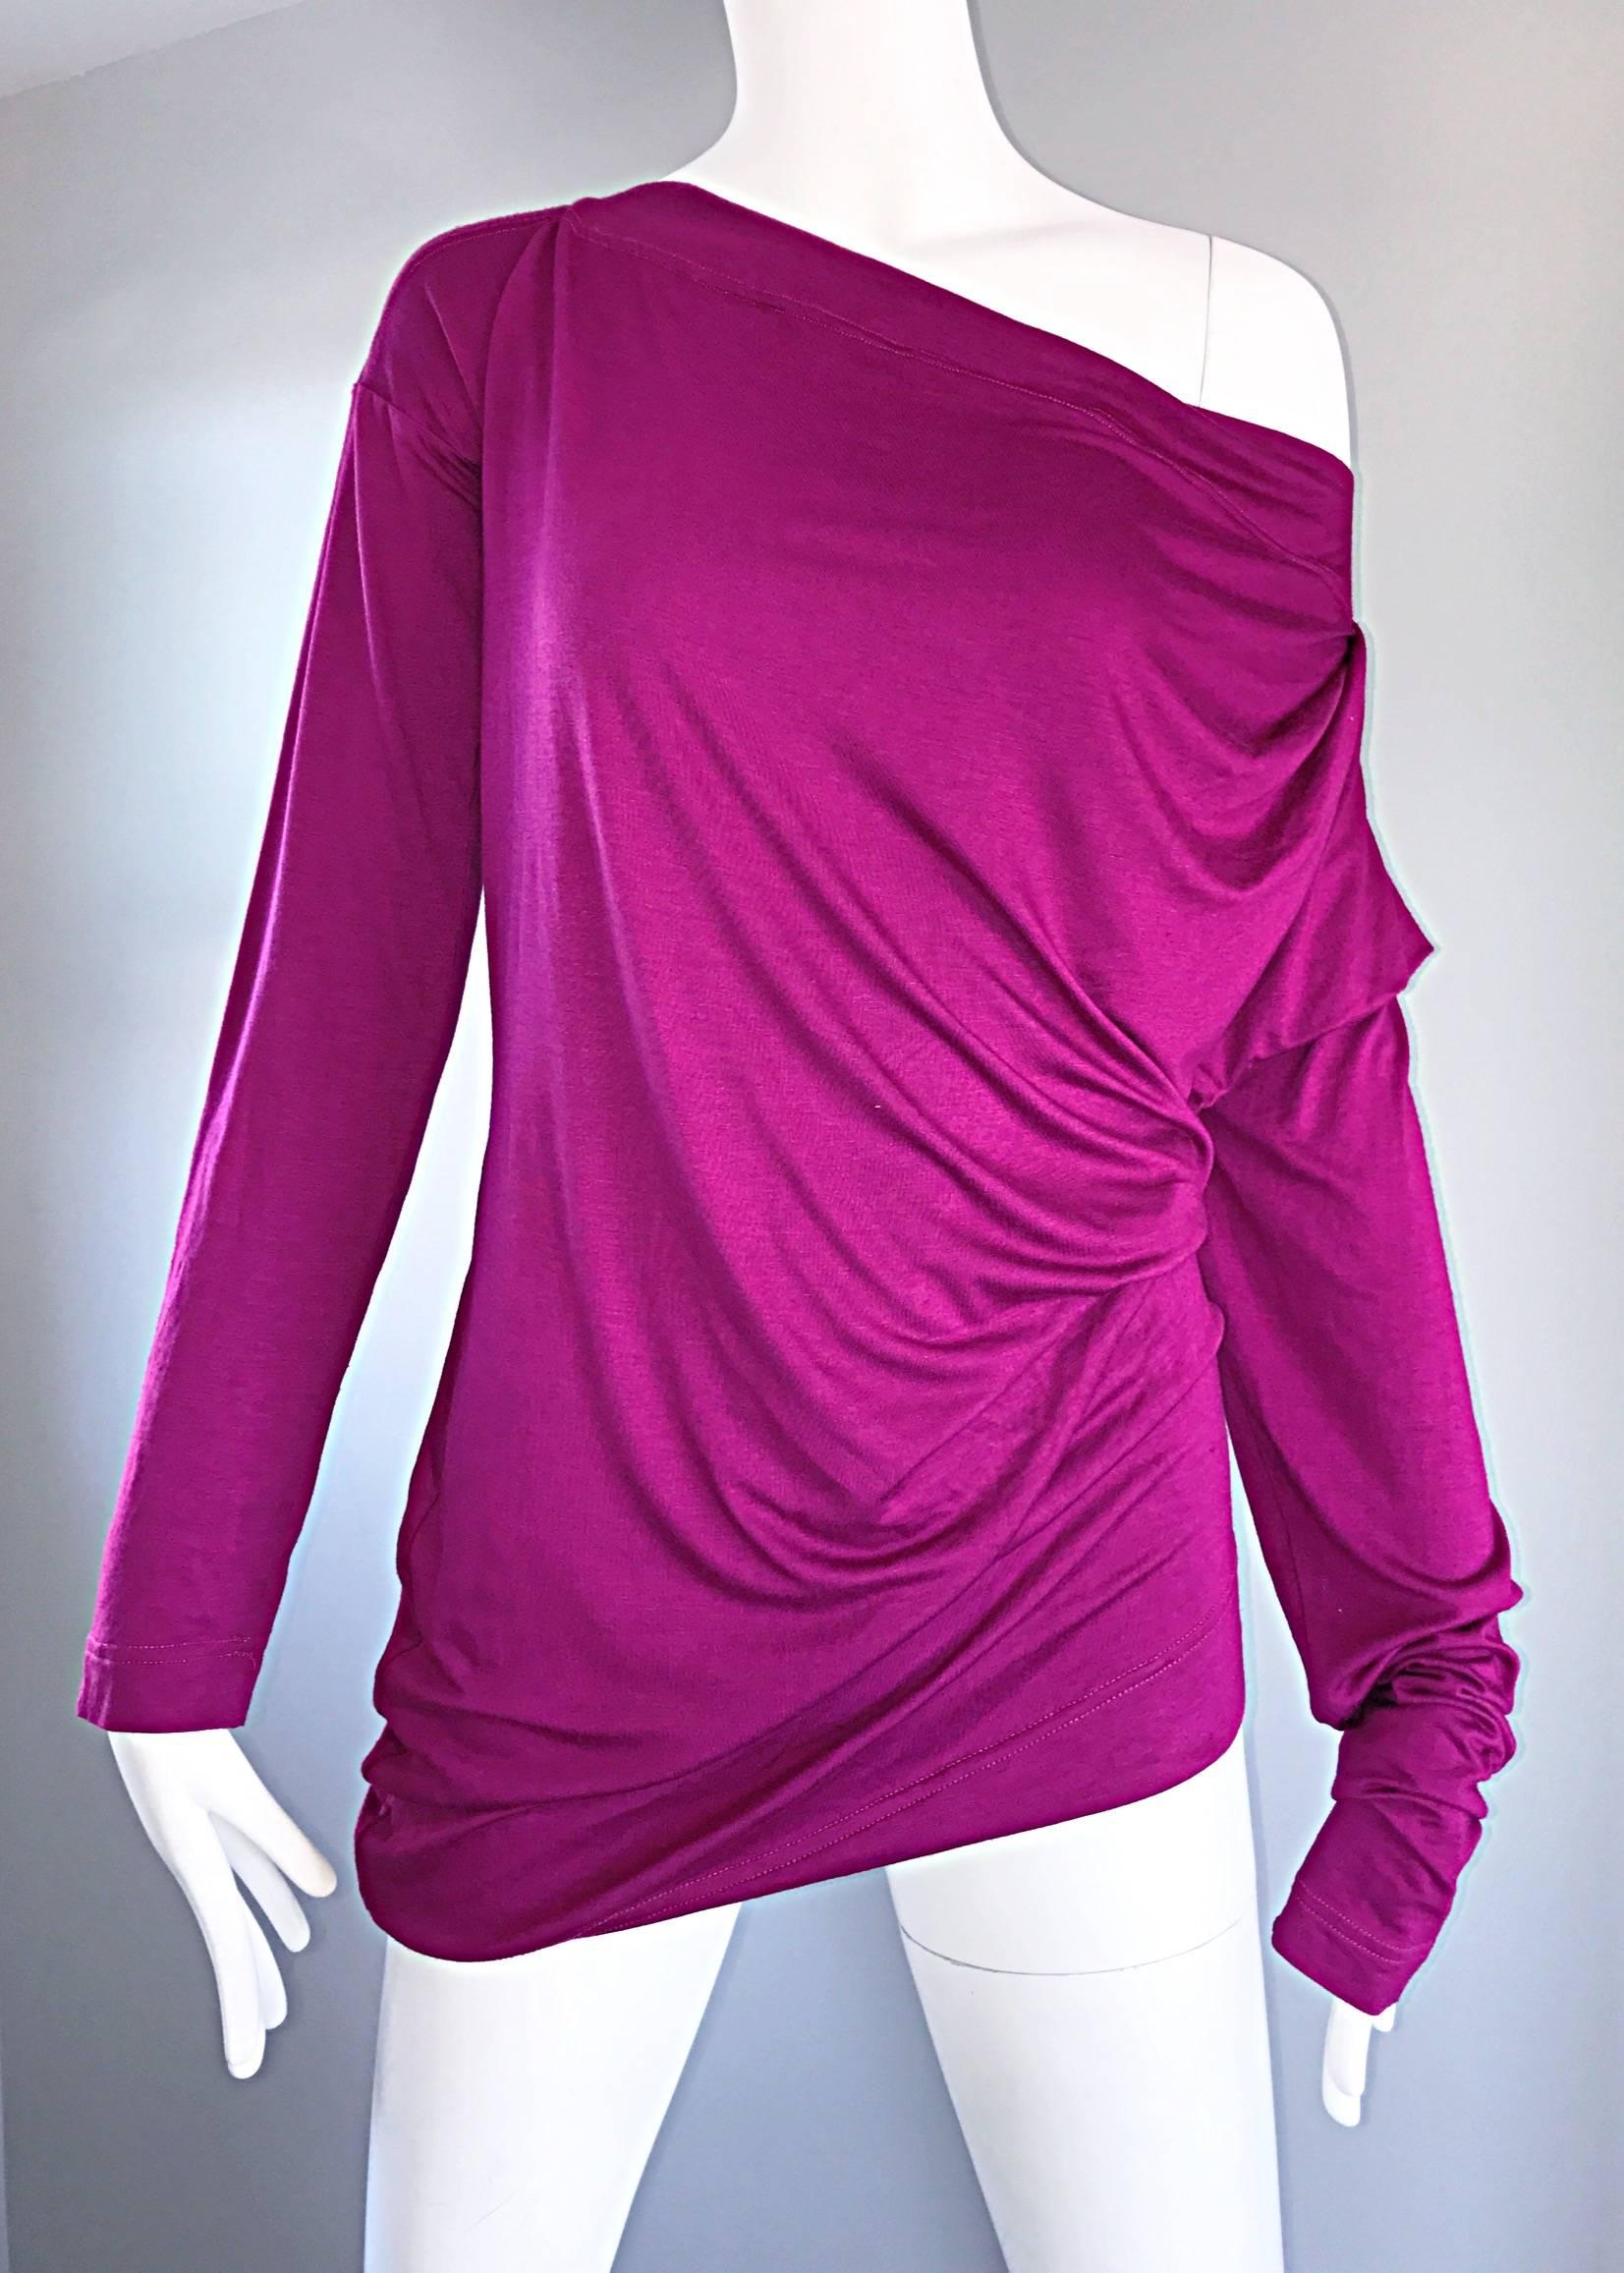 Vivienne Westwood Vintage 90s Magenta Fuchsia Pink Avant Garde Tunic Top Dress 1